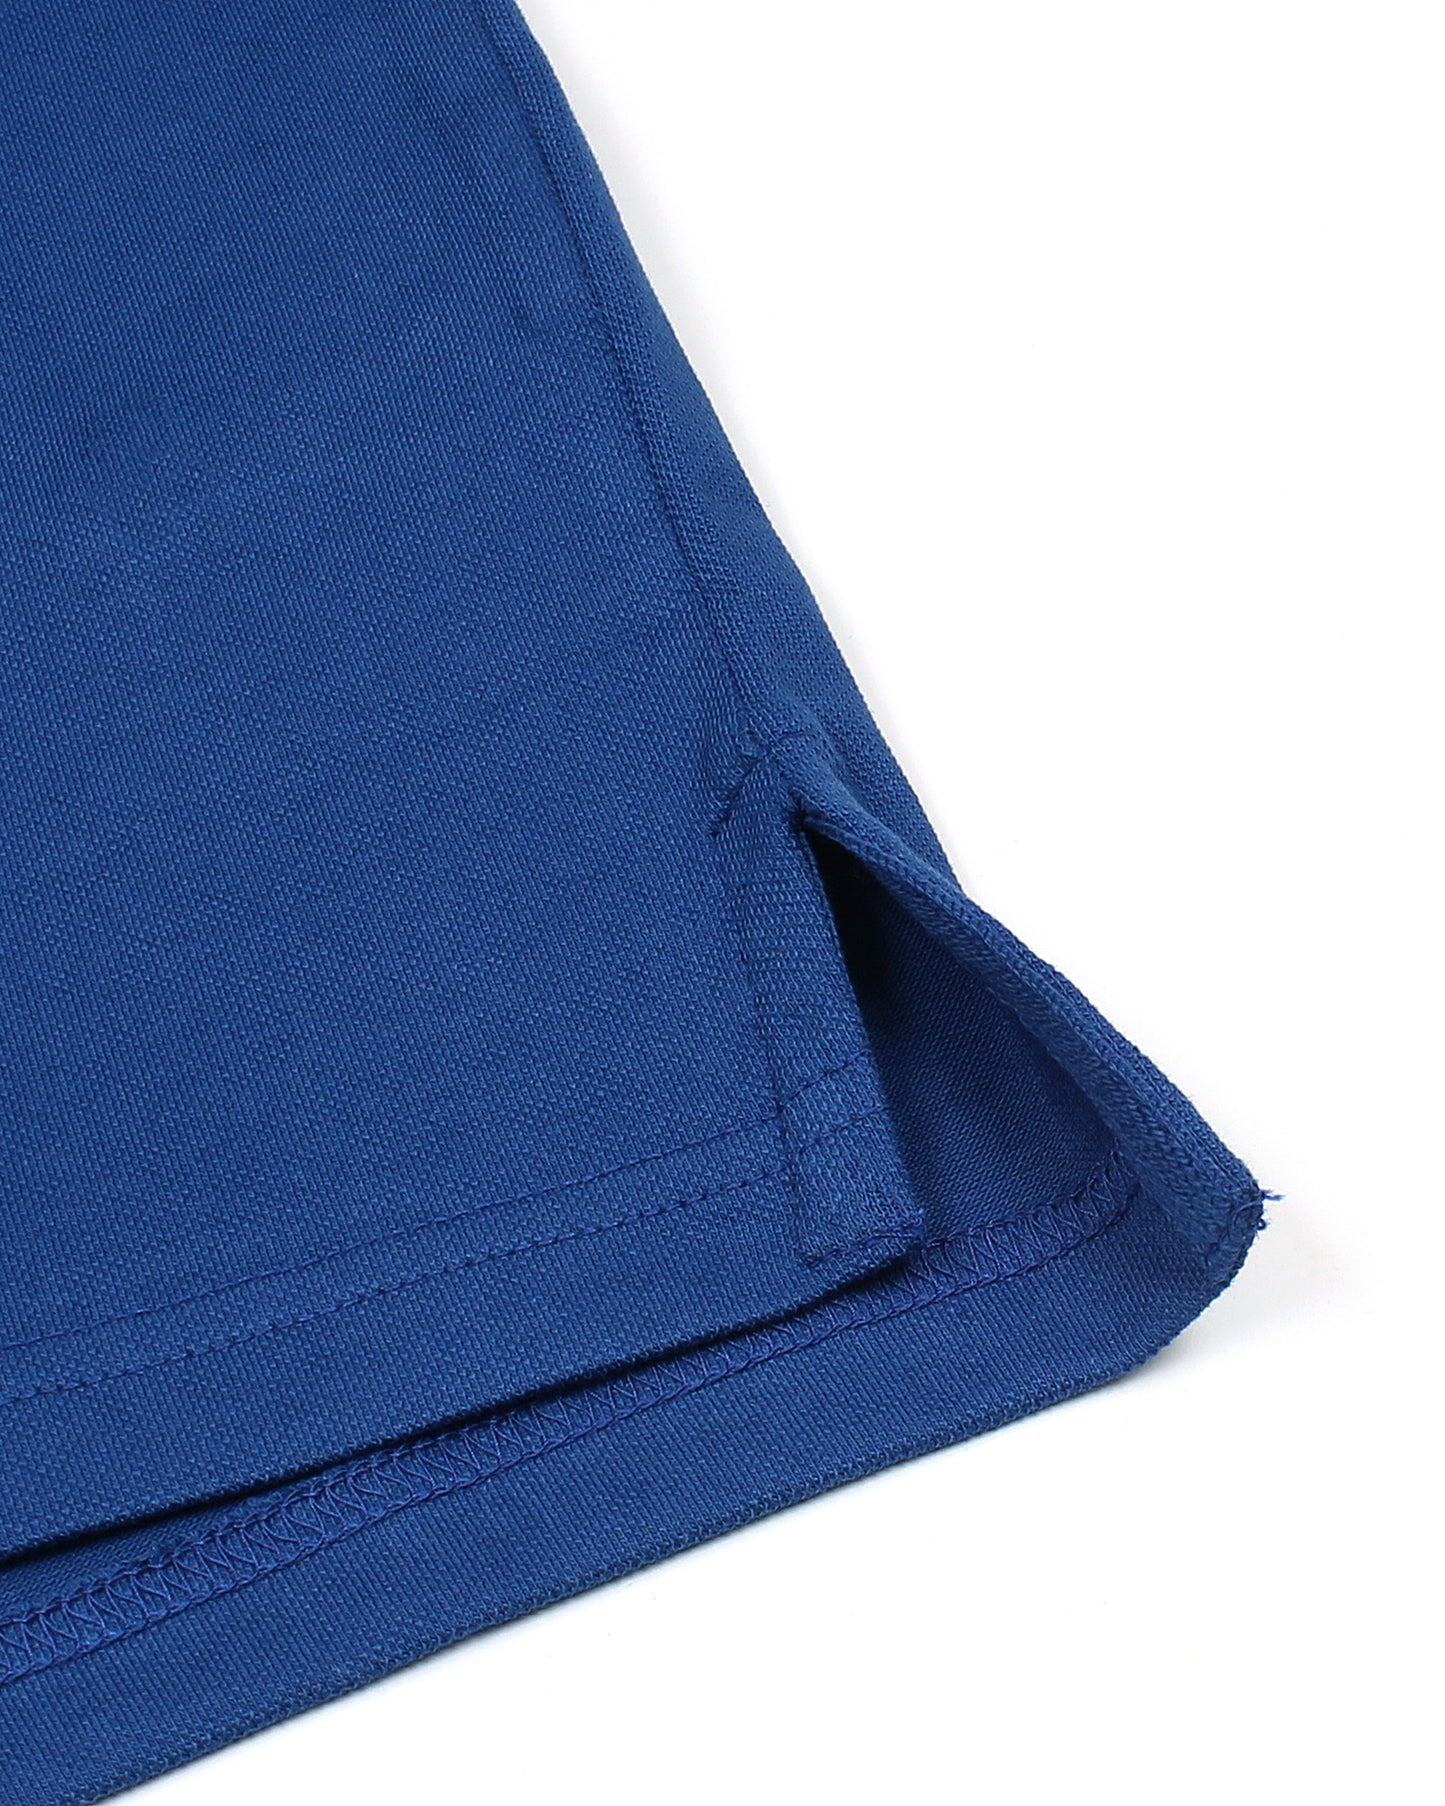 Premium Mon. Polo Shirt - Royal Blue